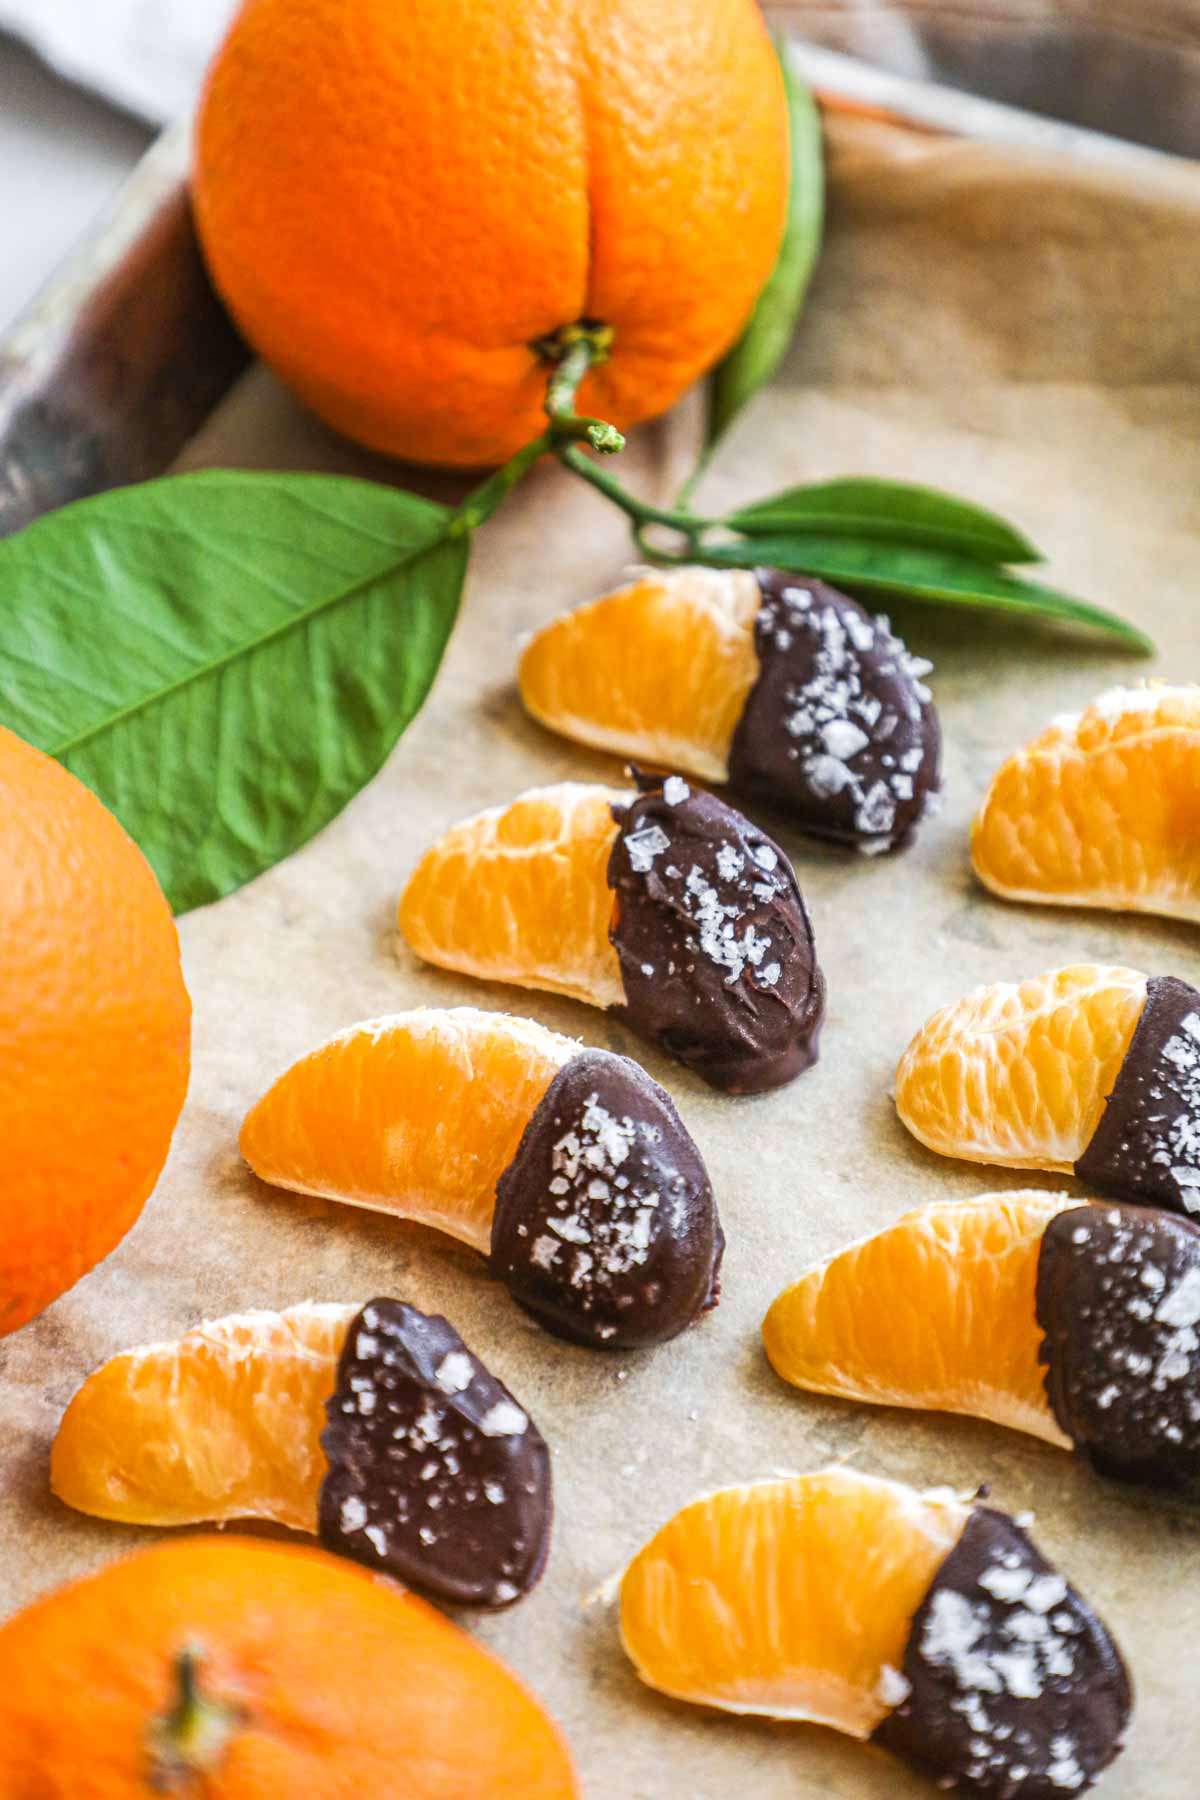 Chocolate-covered mandarin orange slices with semi-sweet chocolate and flaky sea salt.